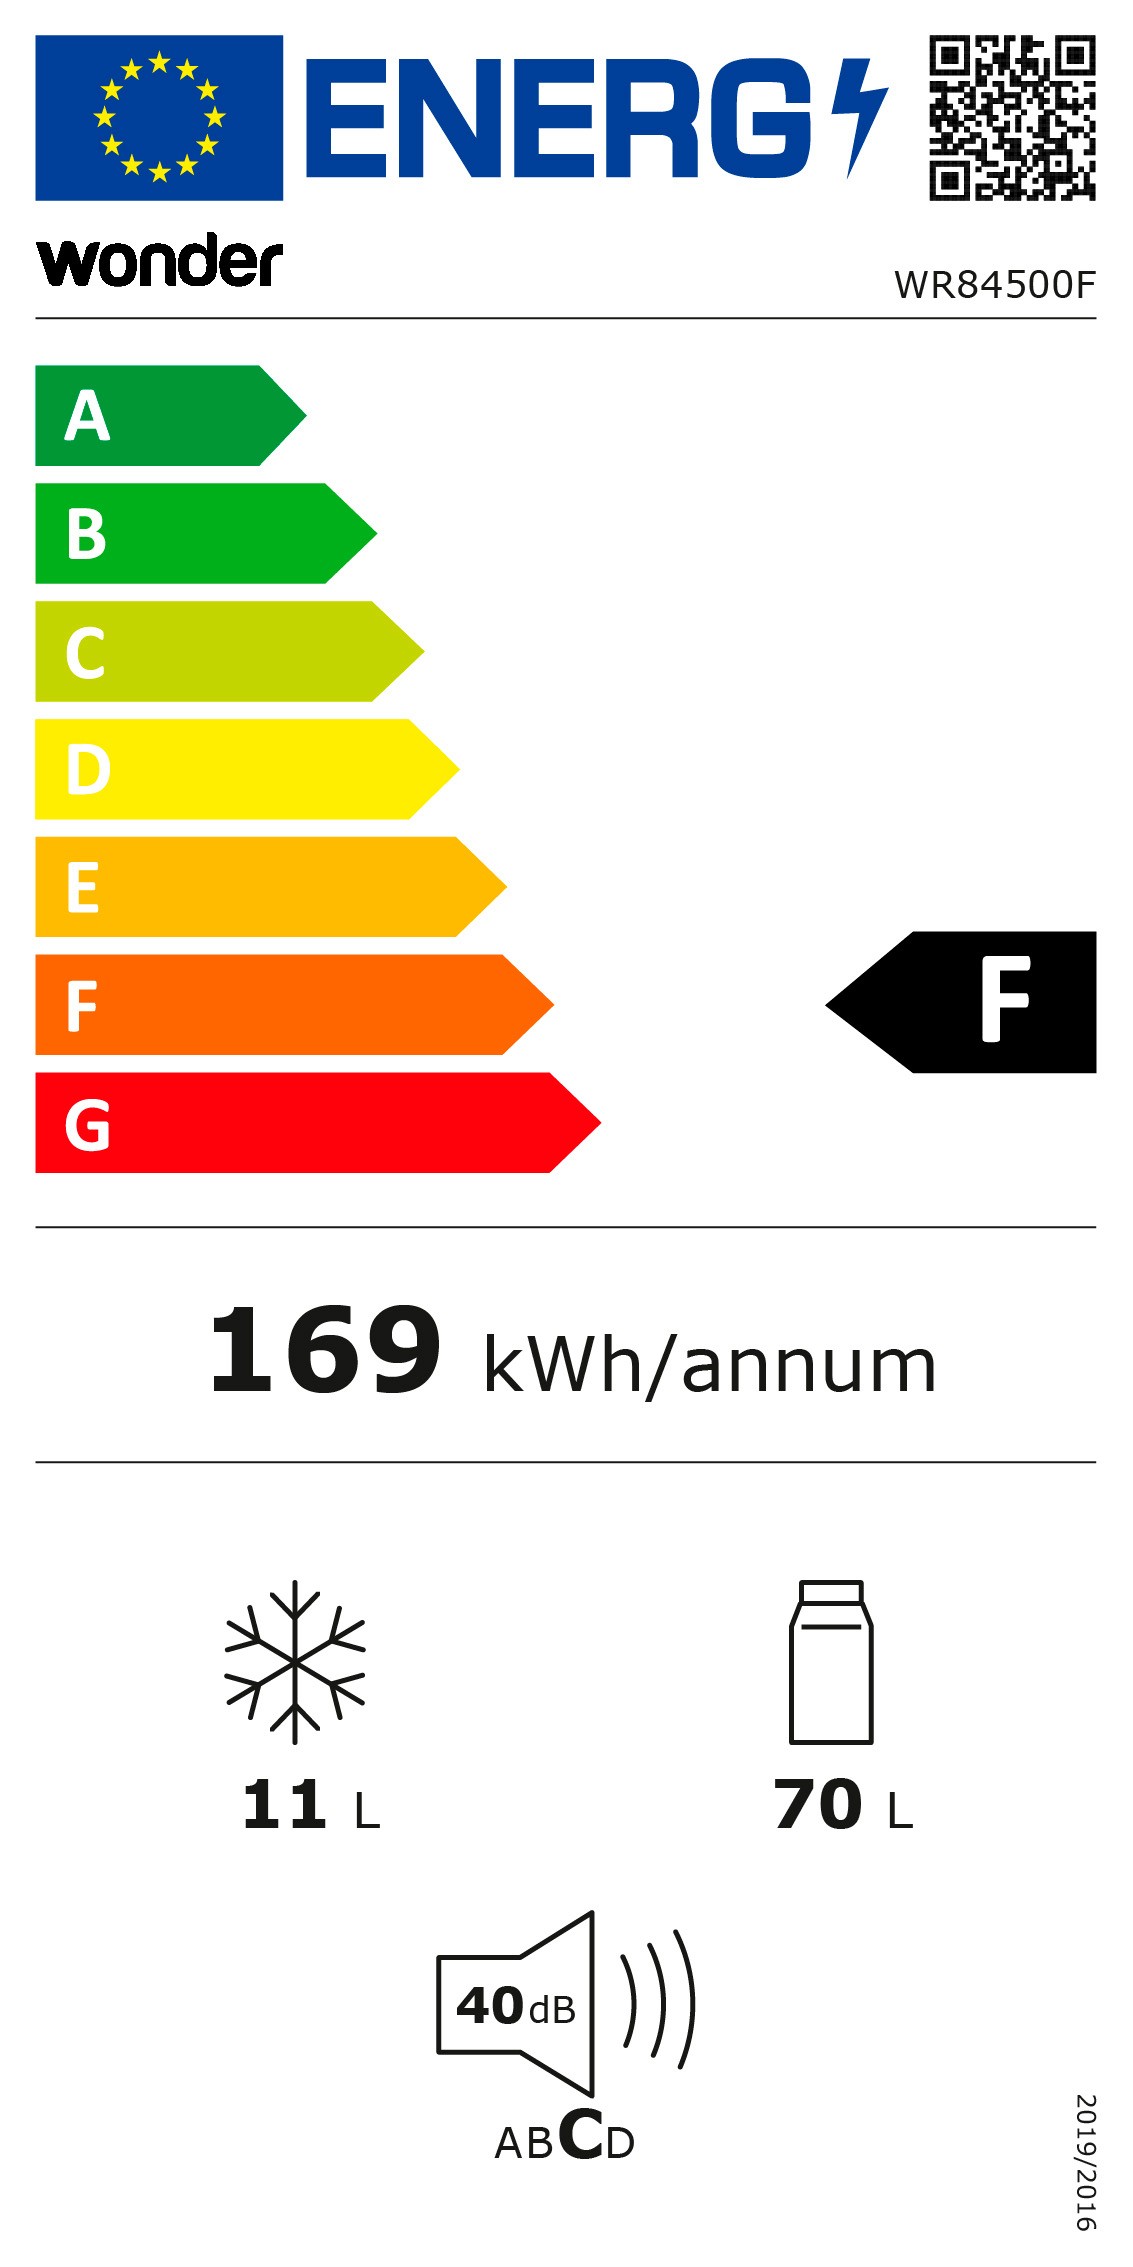 Etiqueta de Eficiencia Energética - WR84500F